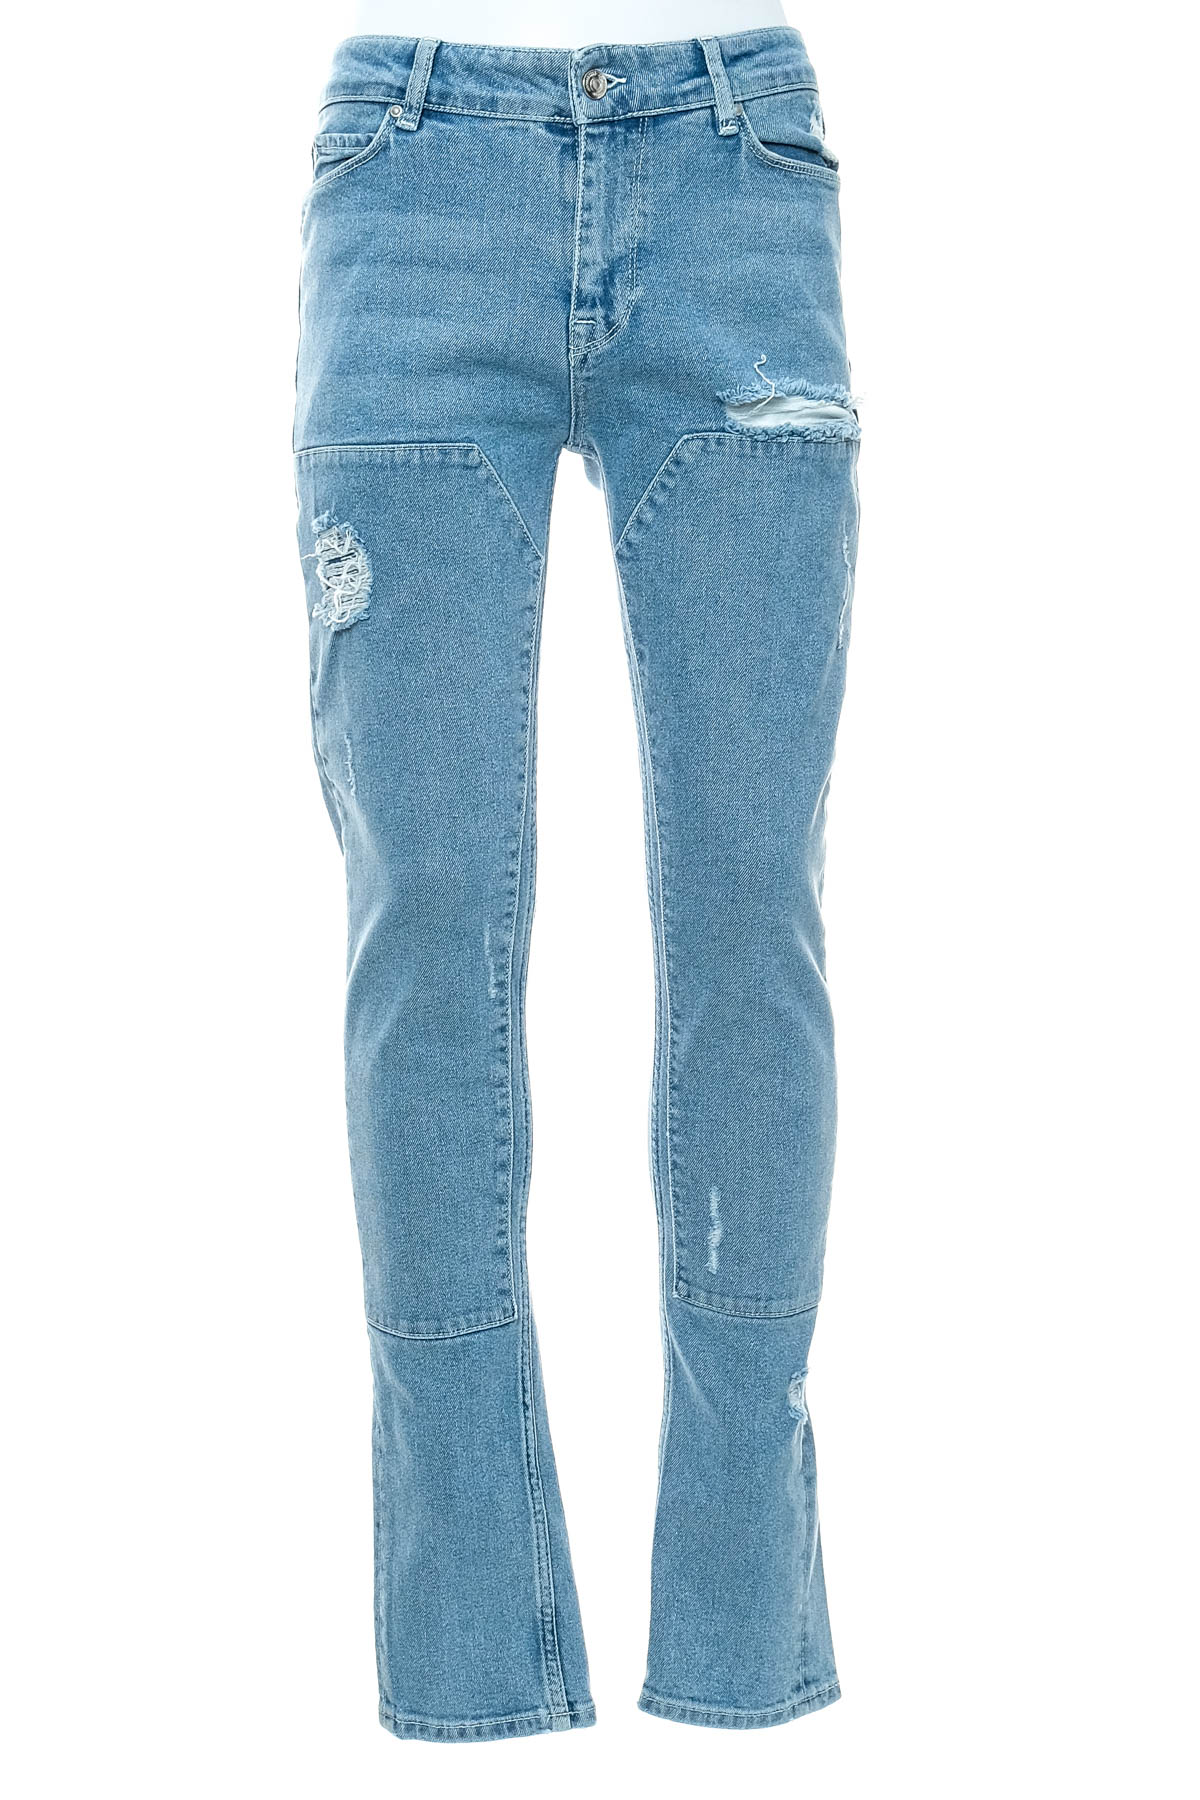 Men's jeans - Asos - 0